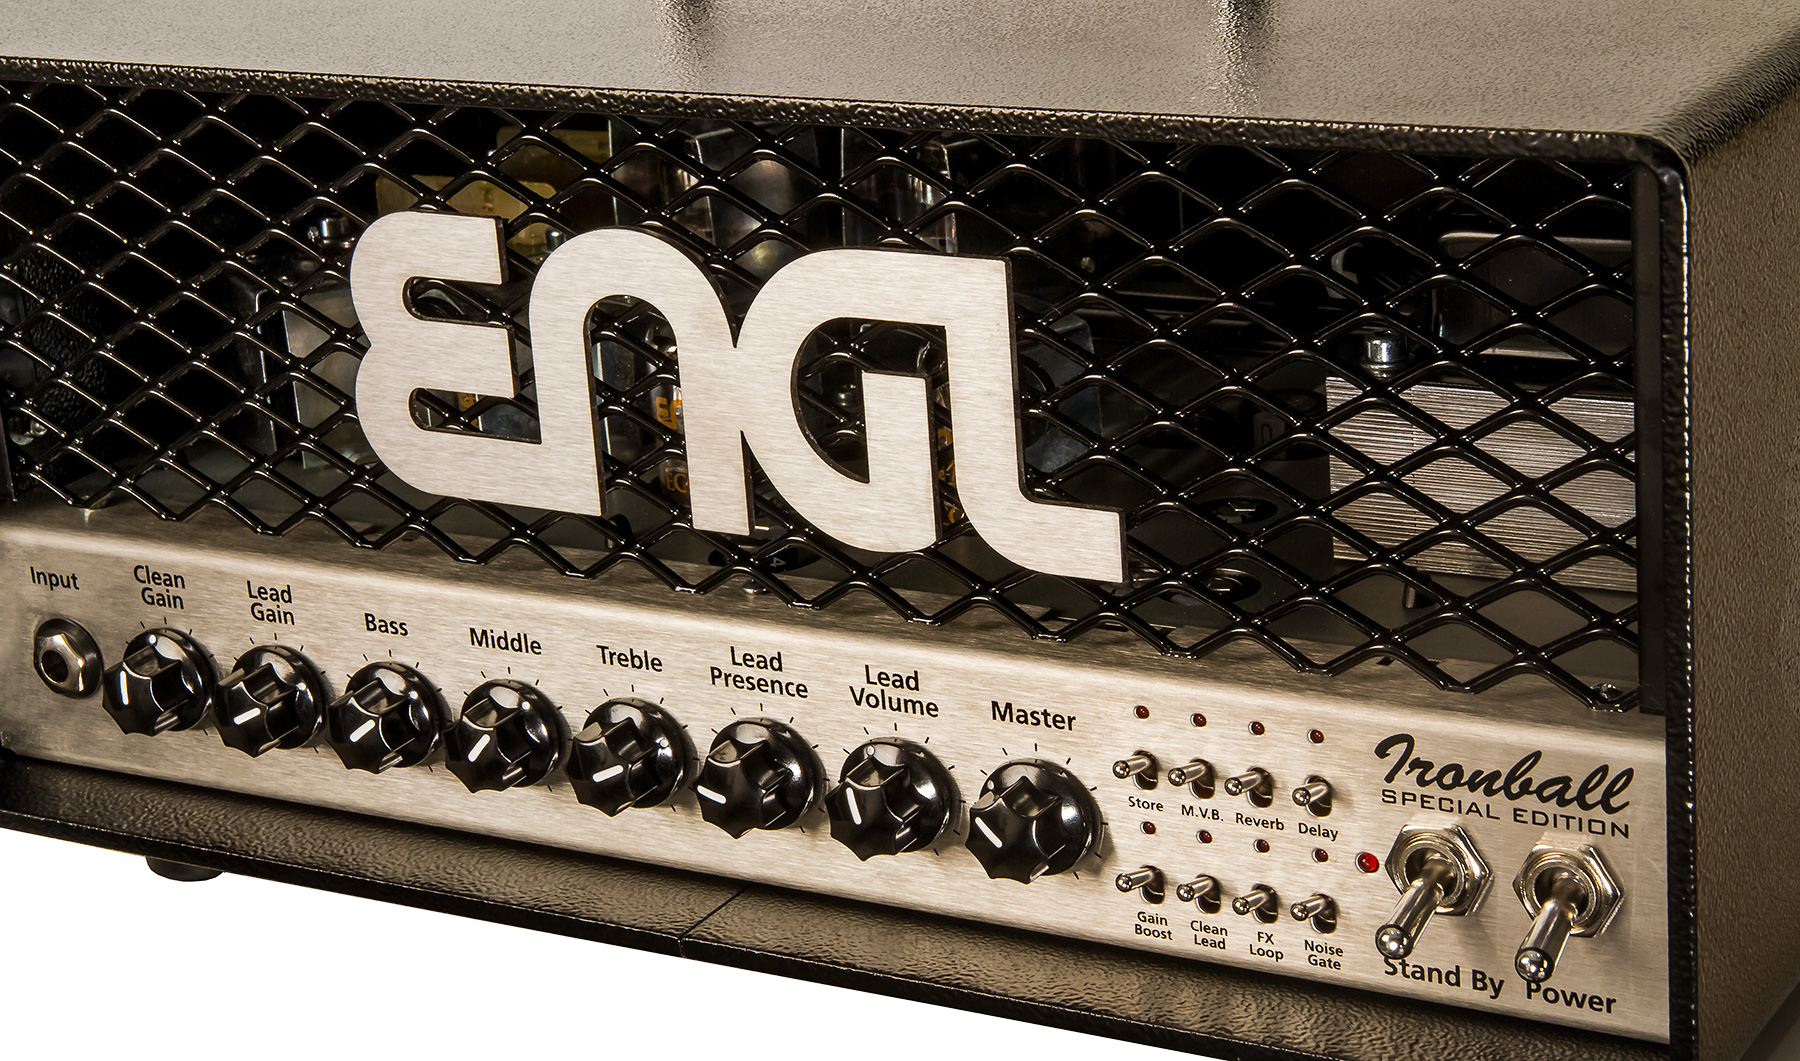 Engl Ironball E606se Special Edition Head 20w El84 - Electric guitar amp head - Variation 1